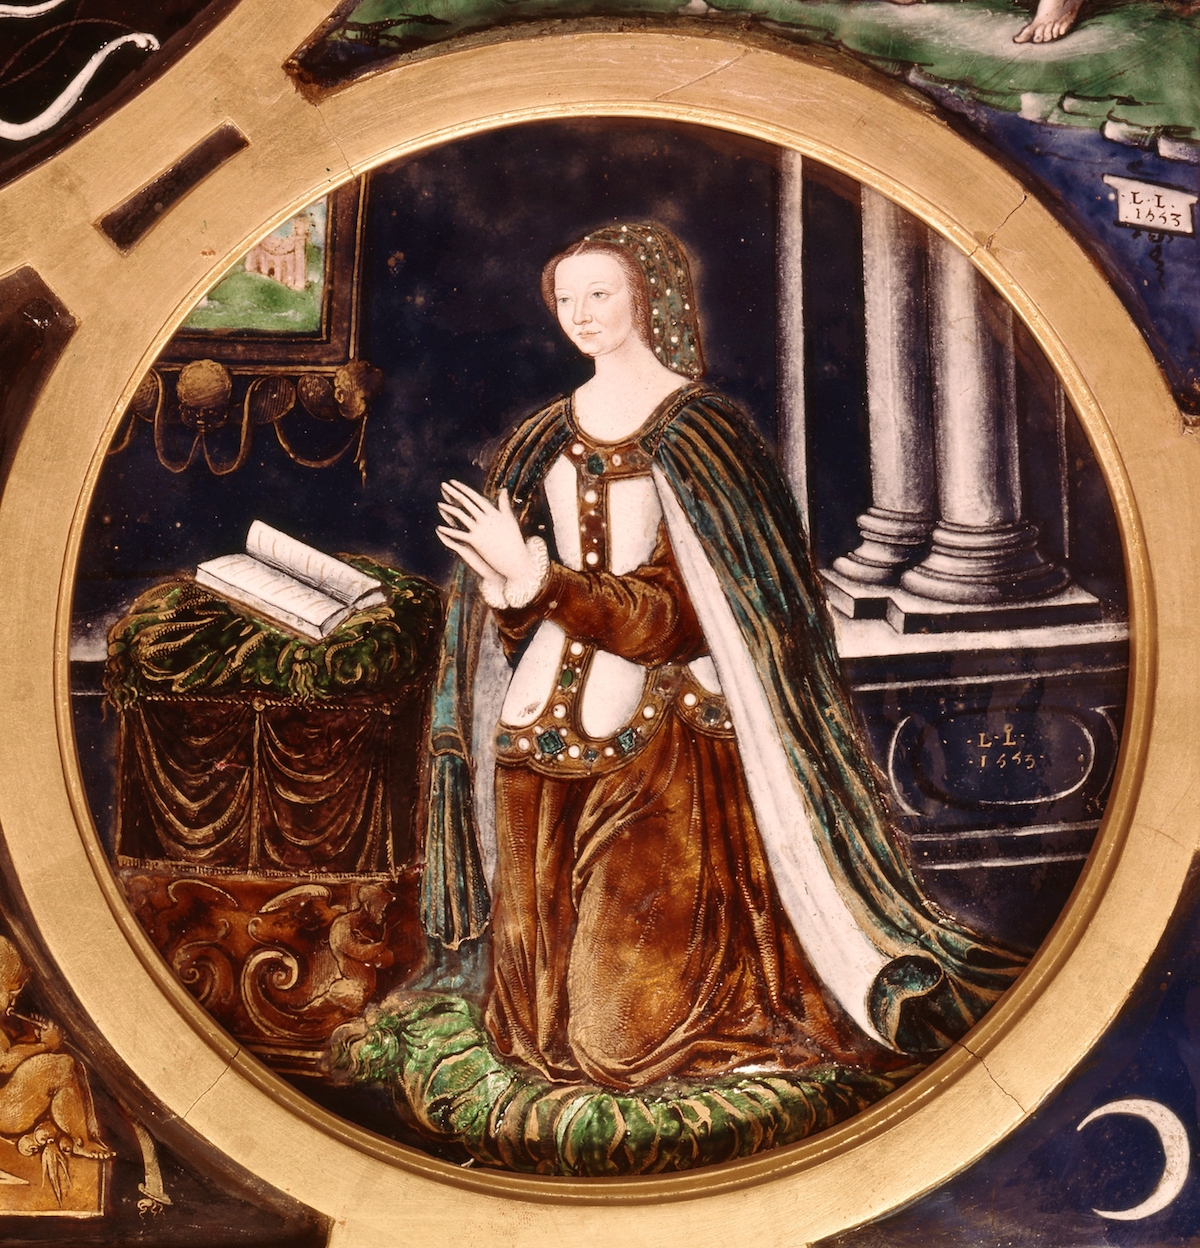 Catherine de Medici in a portrait kept at the Louvres in Paris.